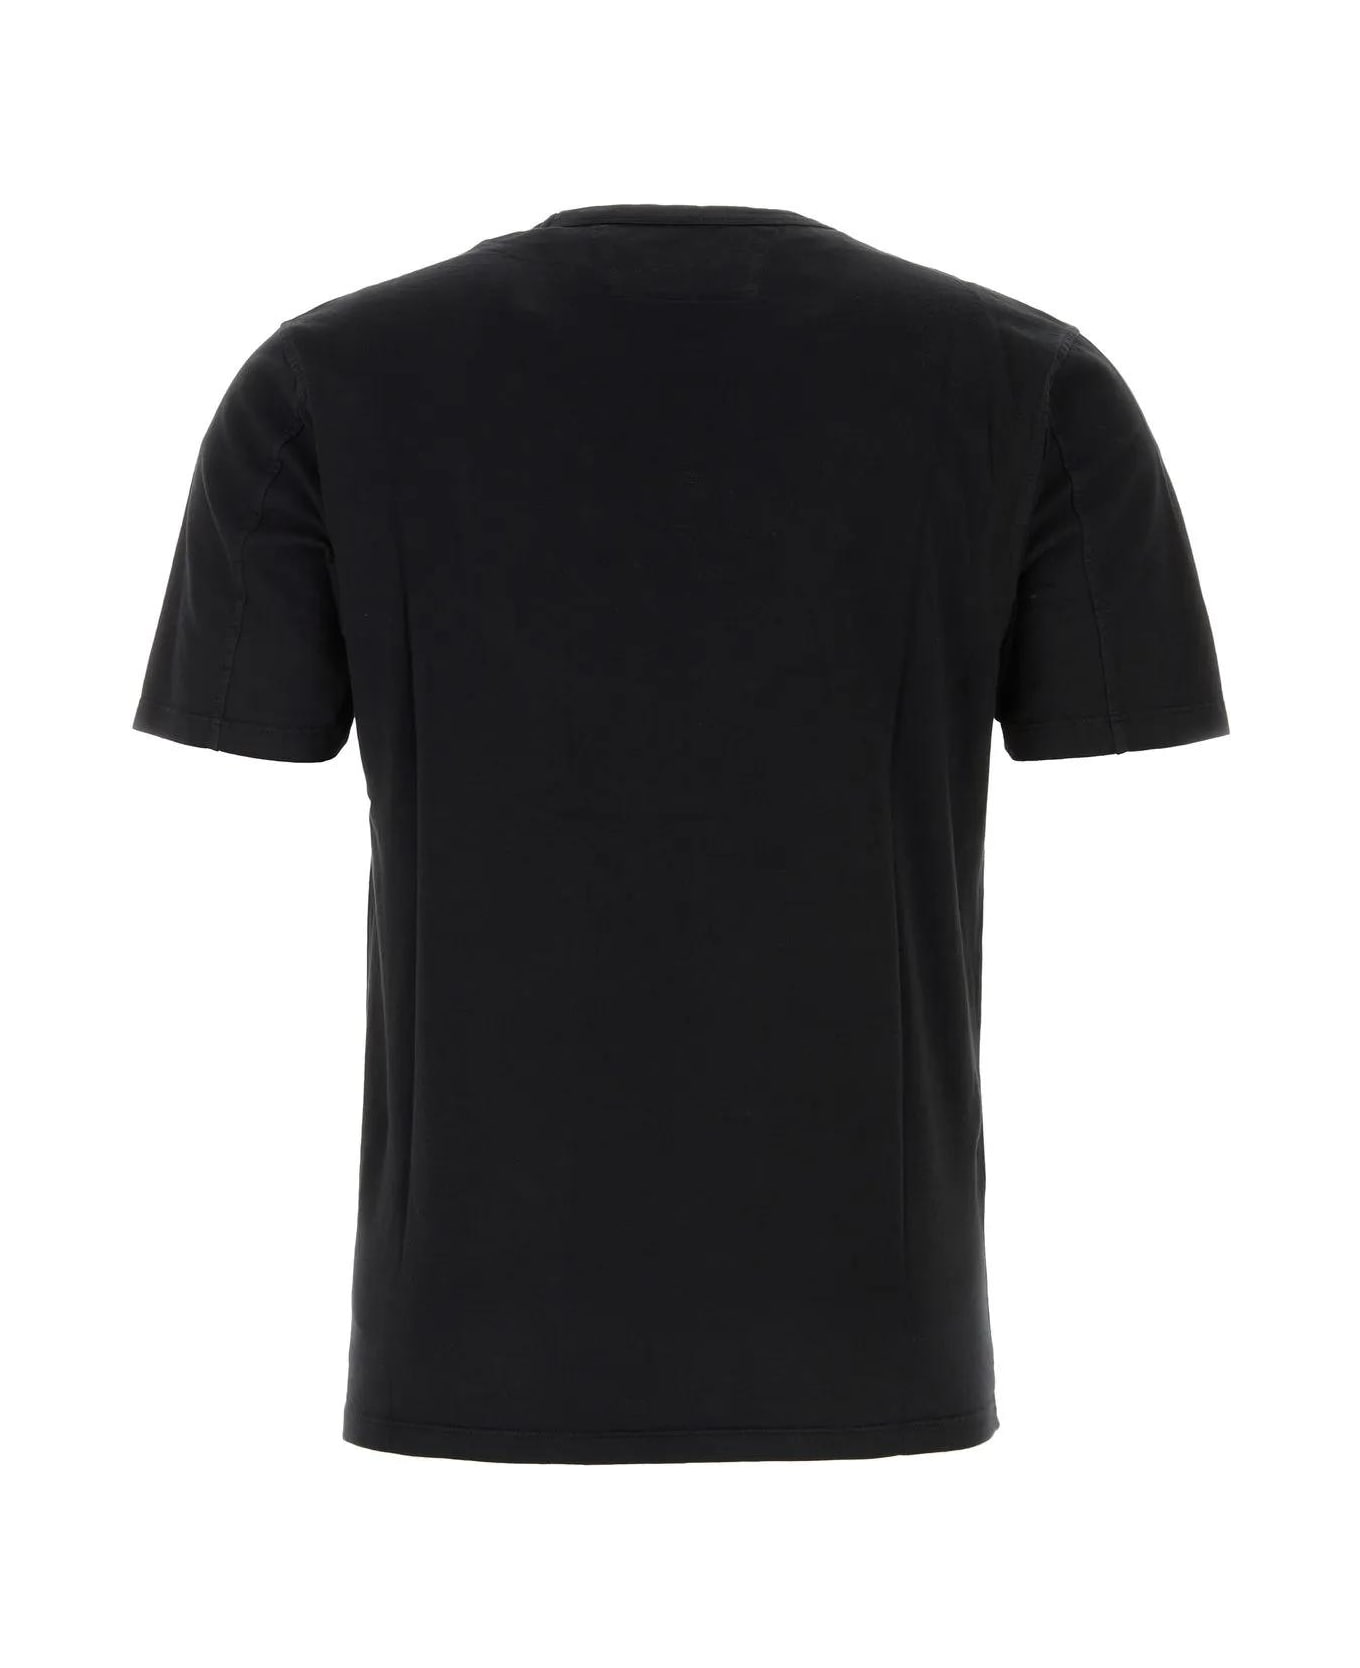 C.P. Company Black Cotton T-shirt - Nero シャツ